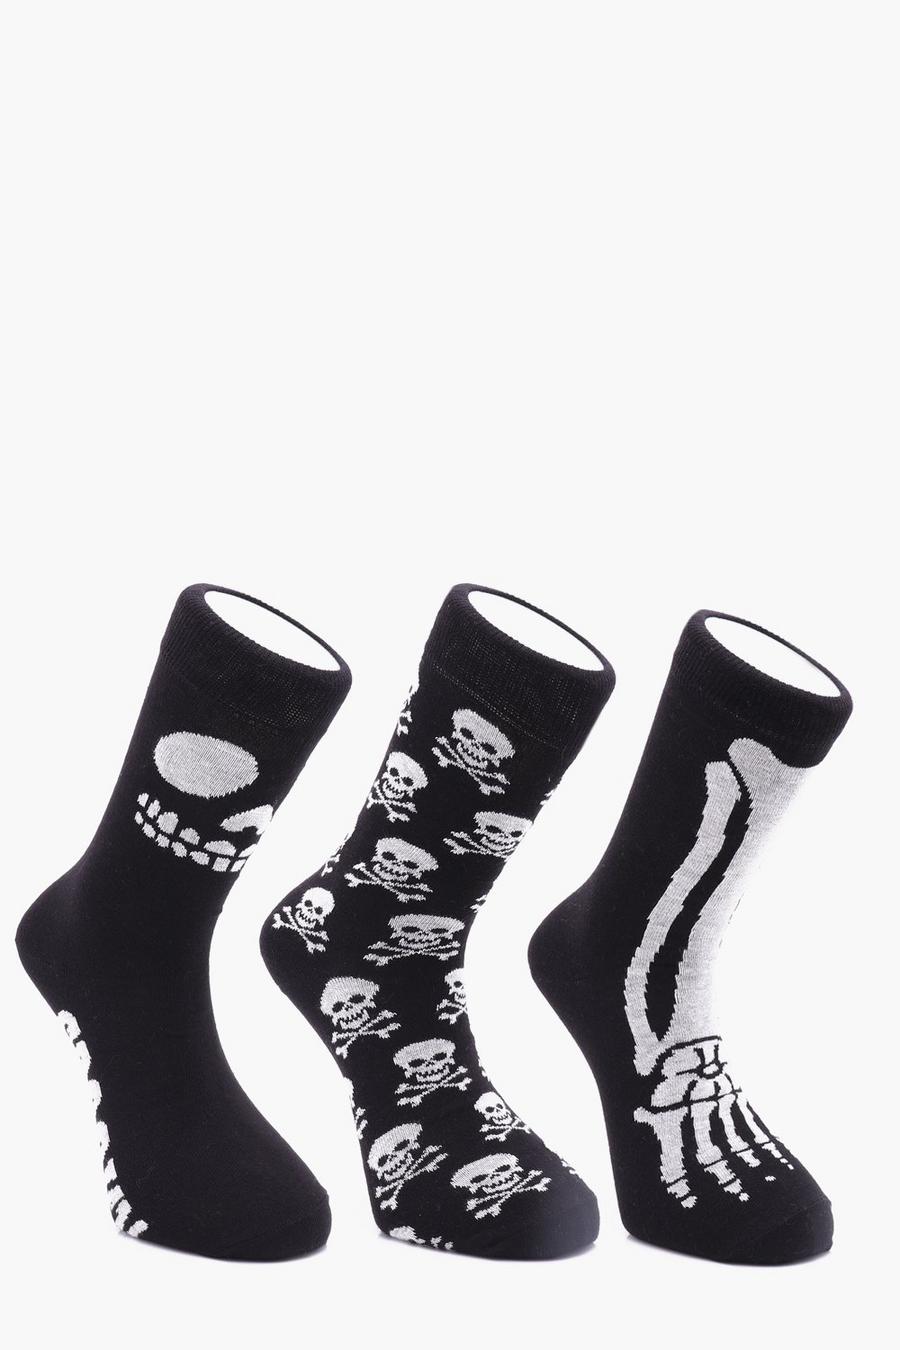 Black 3 Pack Skeleton Halloween Socks image number 1